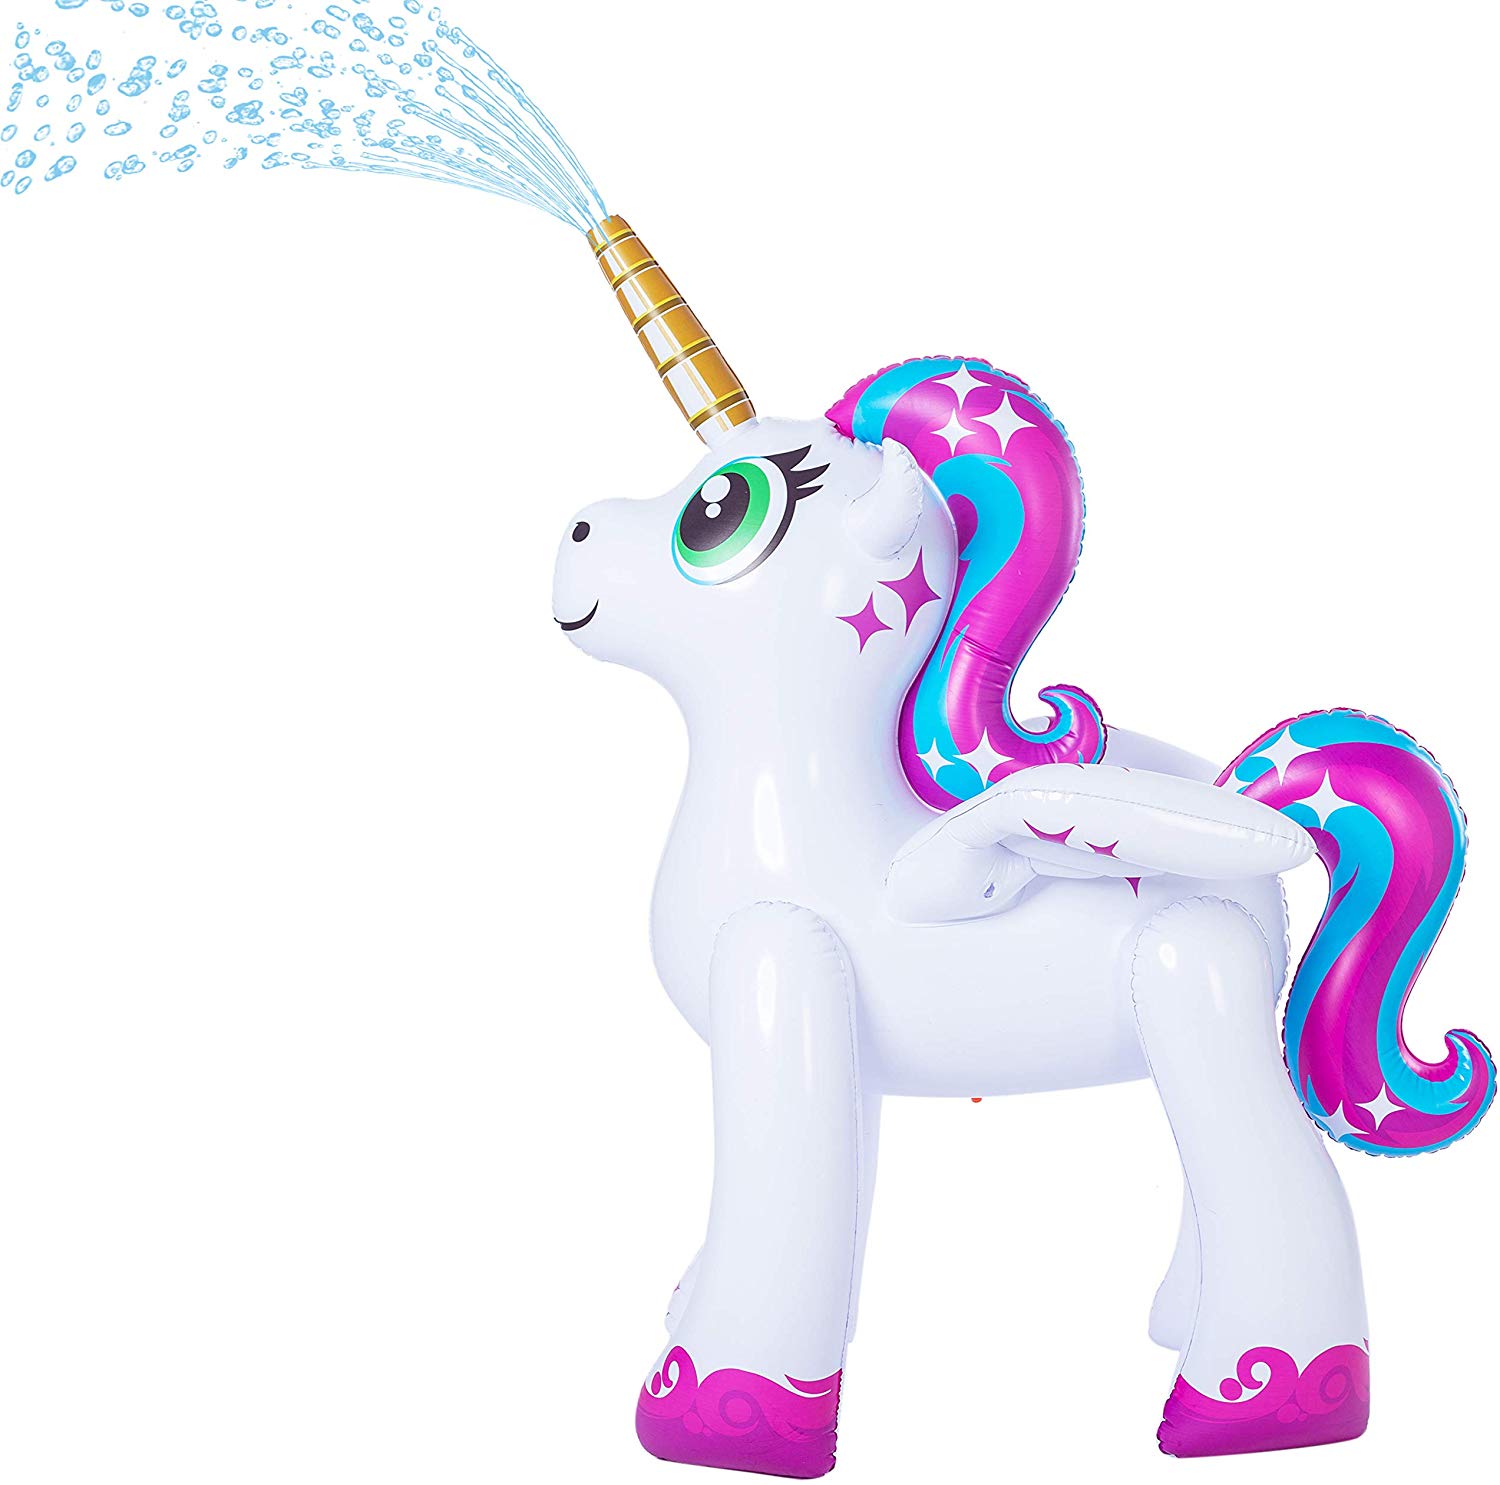 JOYIN Inflatable Unicorn Yard Sprinkler, Alicorn/ Pegasus Lawn Sprinkler for Kids (5.3 Feet)